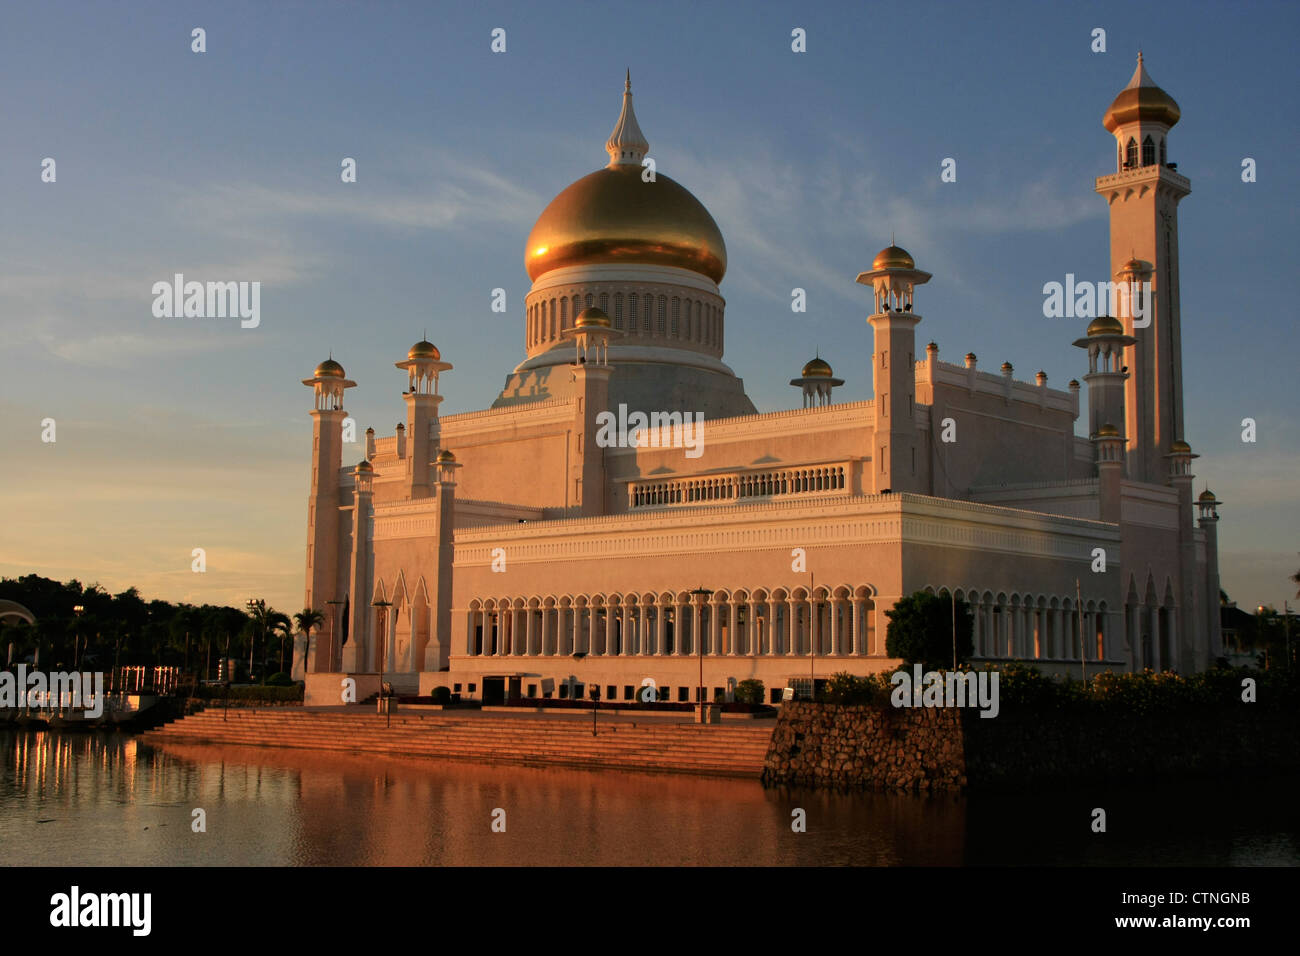 Sultan Omar Ali Mosquée Saifudding, Bandar Seri Begawan, Brunei, en Asie du sud-est Banque D'Images